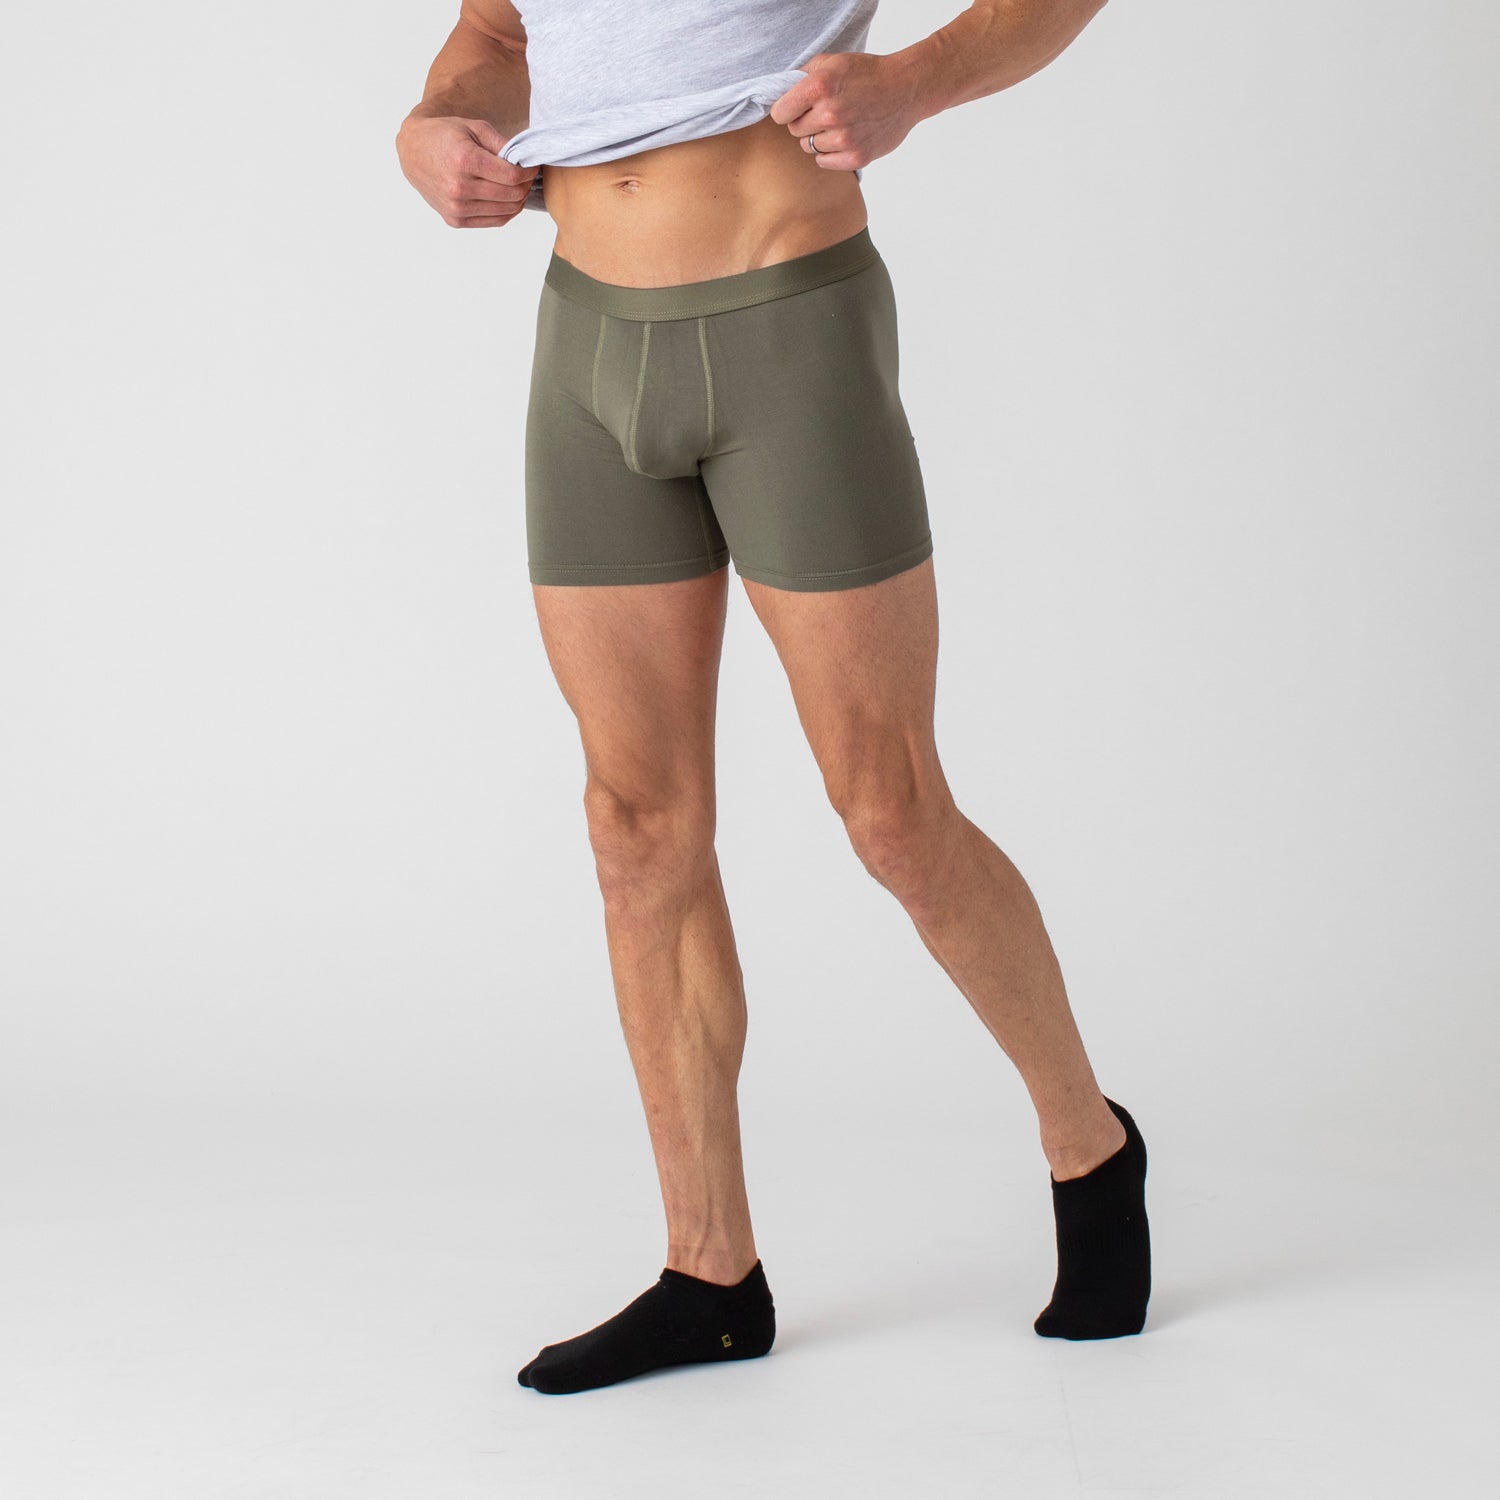 GetUSCart- True Religion Mens Boxer Briefs - Trunks Underwear for Men Pack,  6-Pack Lime Green